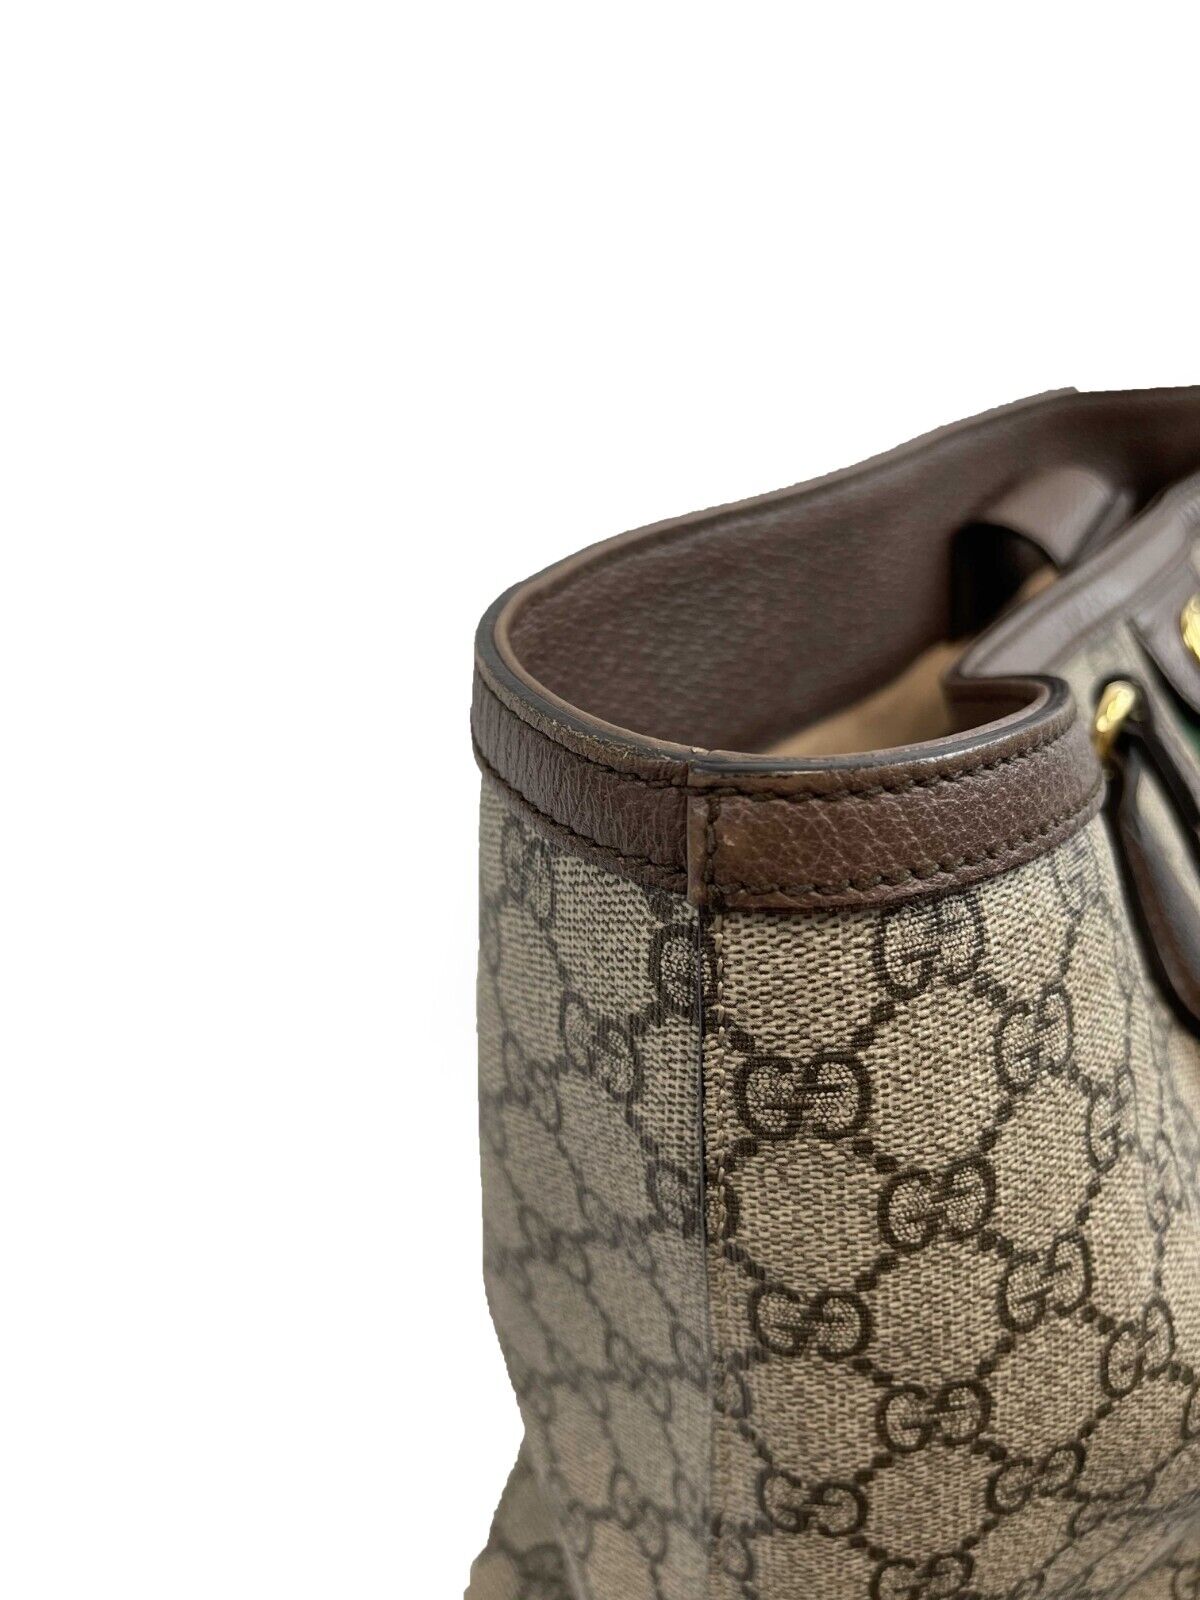 Gucci Medium Ophidia Tote Beige Brown GG Supreme Canvas Shoulder Bag